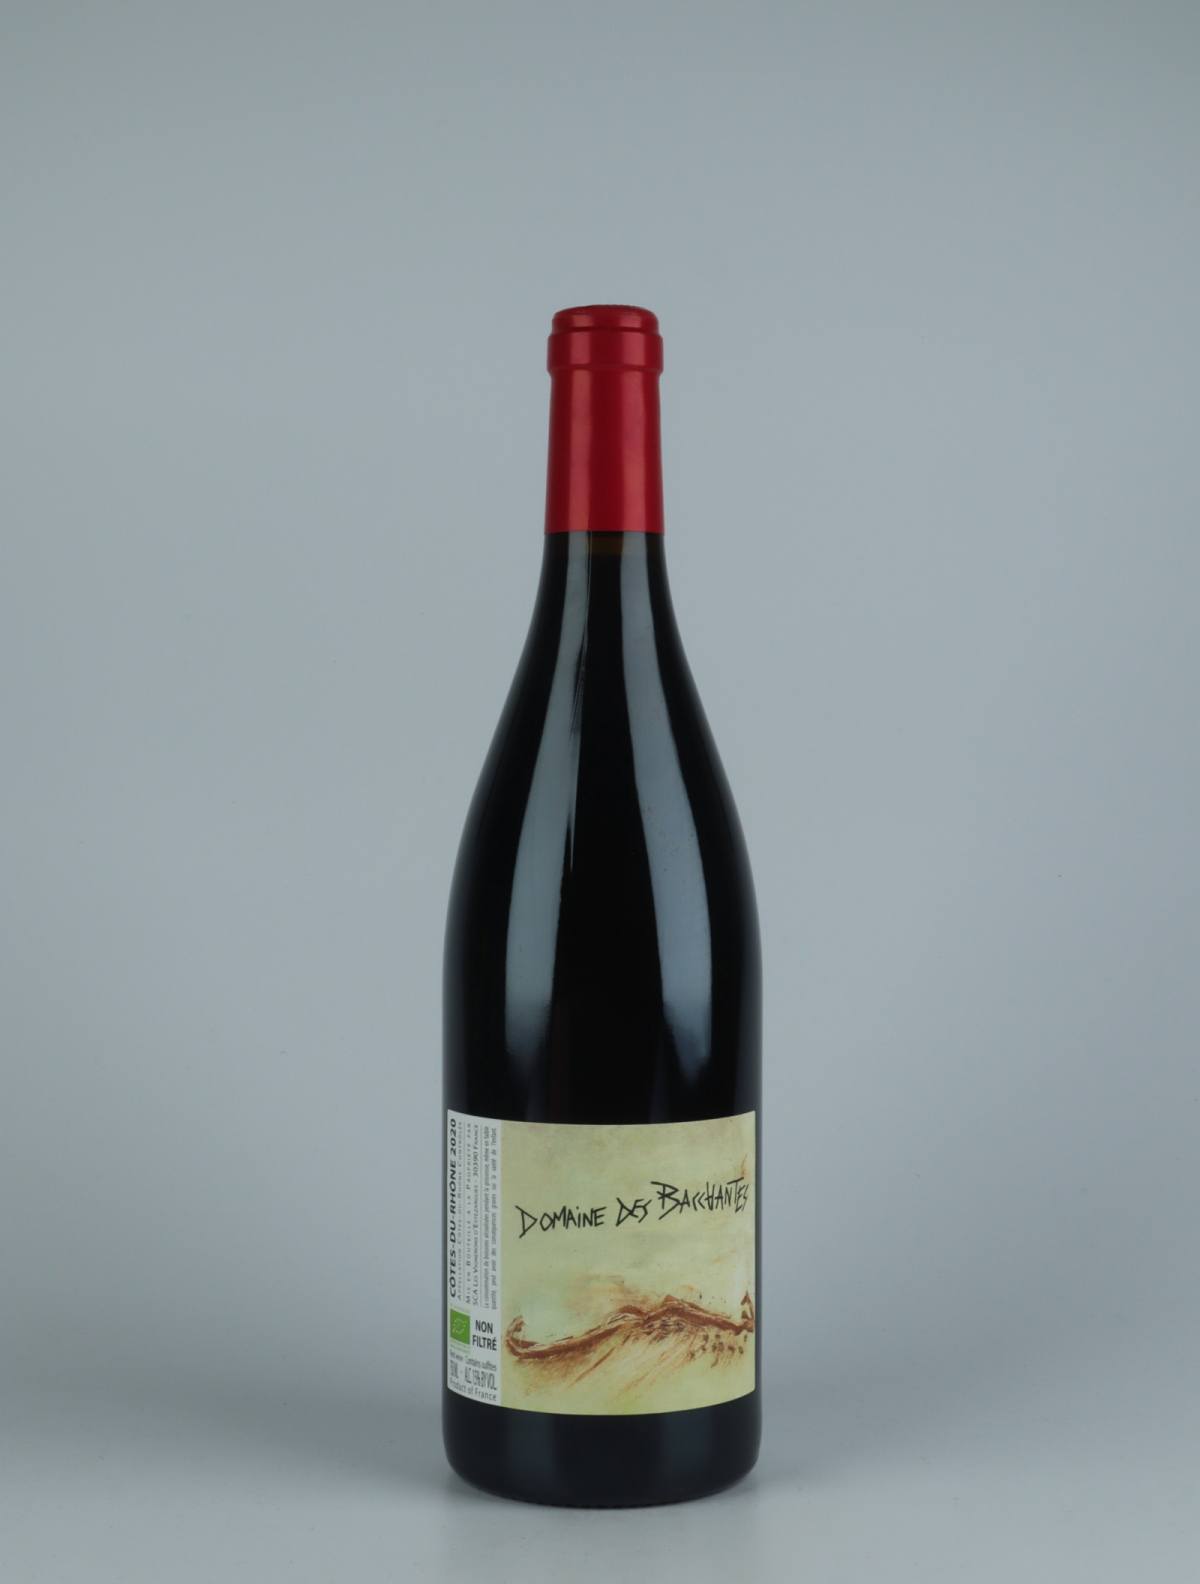 En flaske 2020 Côtes du Rhône - Domaine des Bacchantes Rødvin fra Les Vignerons d’Estézargues, Rhône i Frankrig